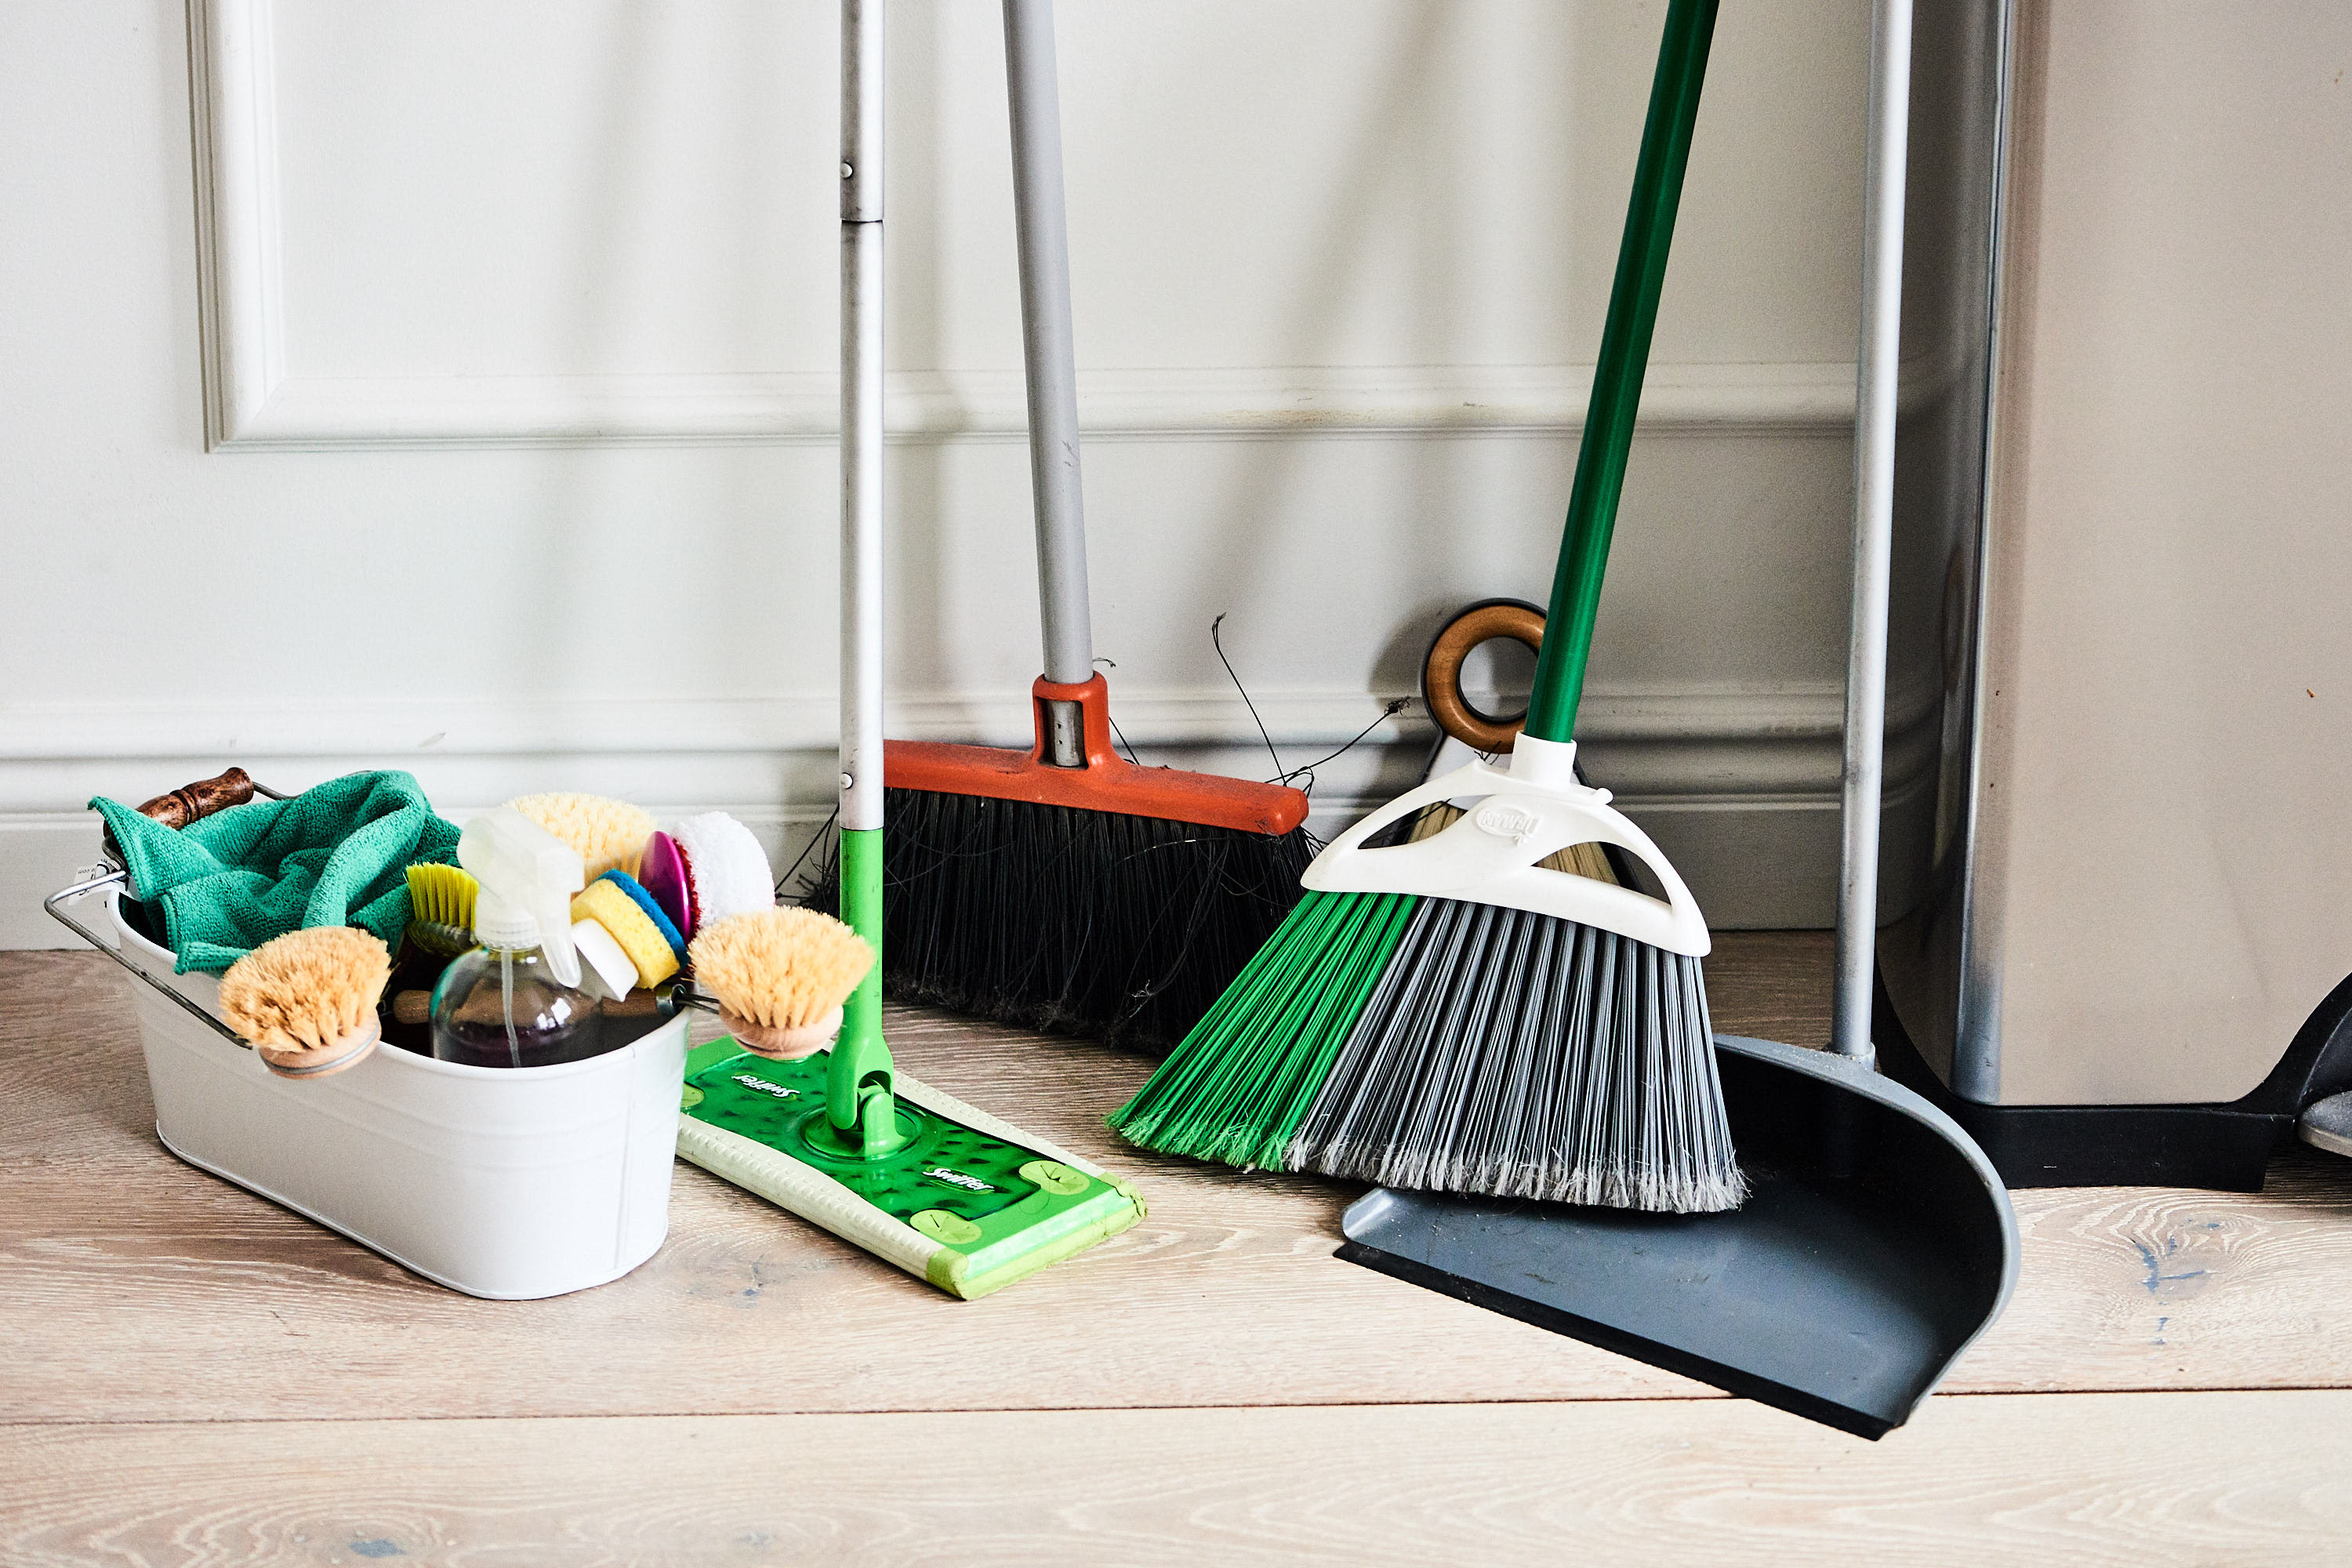 House floor cleaning broom/cleaning stick broom/children broom